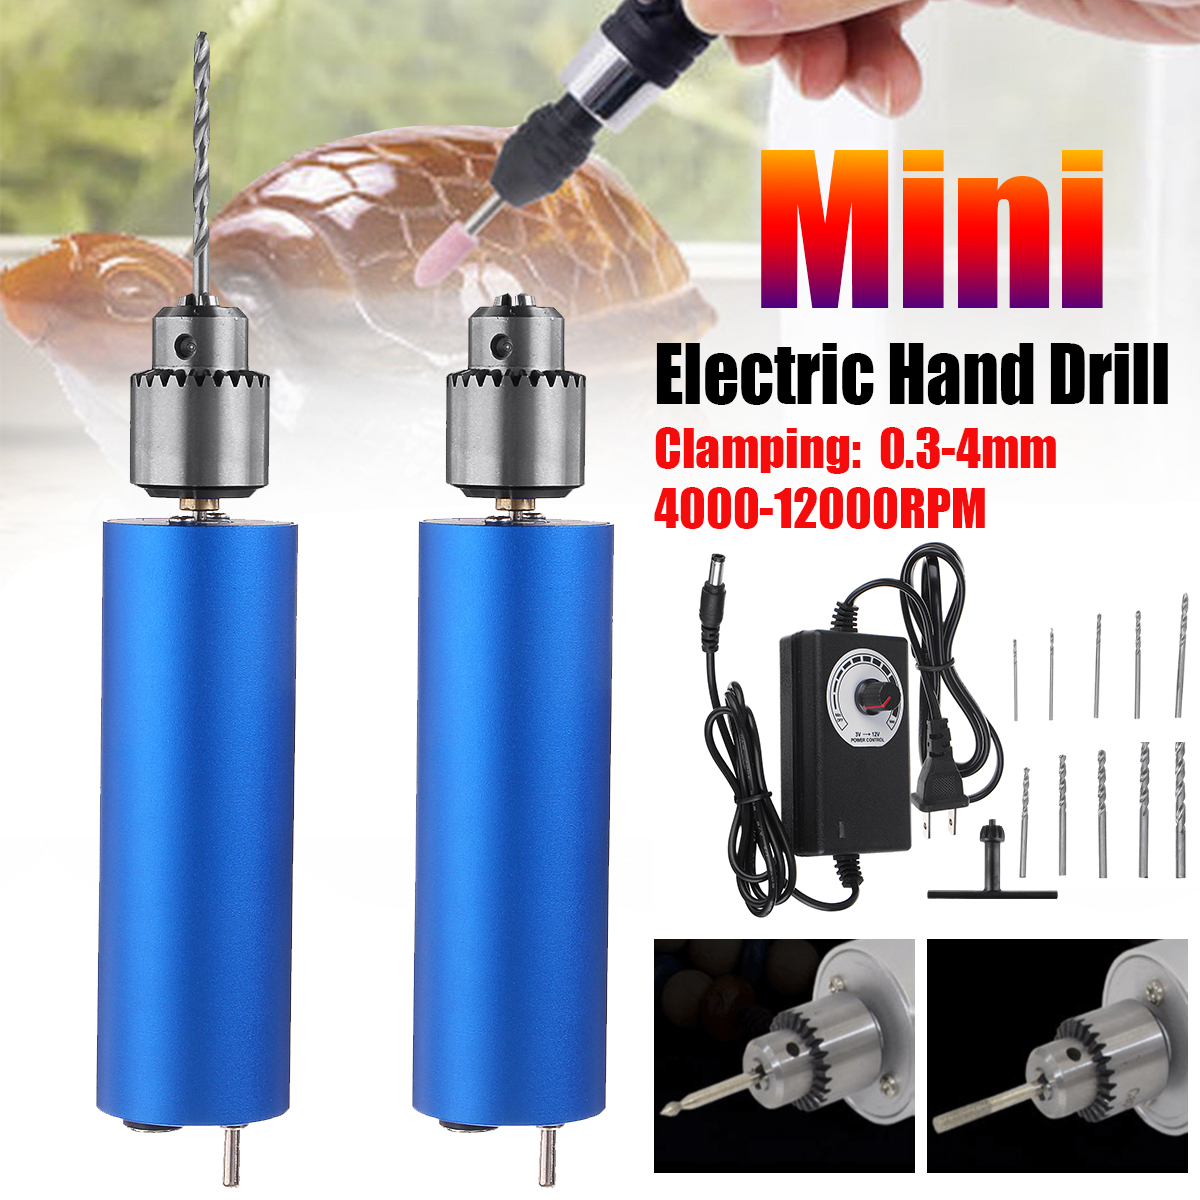 Mini-Electric-Hand-Drill-Grinding-Polishing-Tool-with-DIY-385-Ball-Bearing-Motor-Clamping-03-4mm-1760090-2